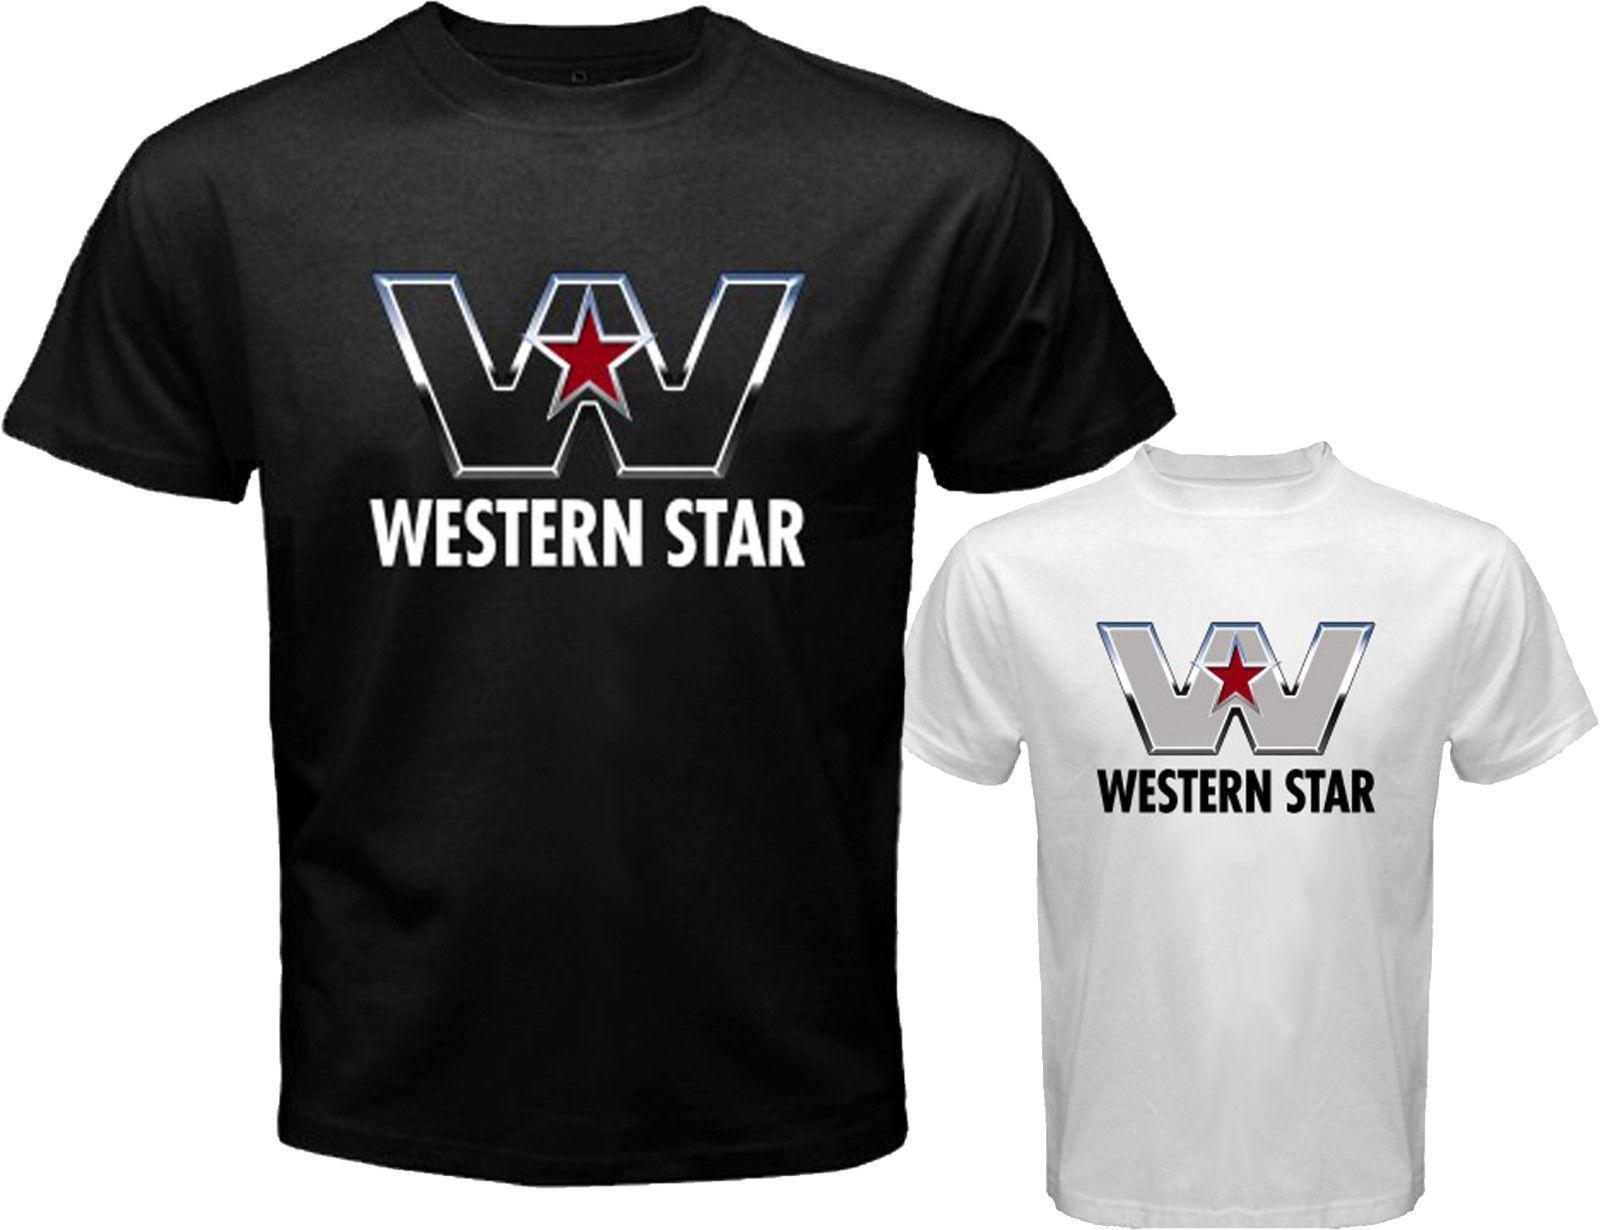 Westerm Star Trucks Logo - New Western Star Trucks Logo Men'S White Black T Shirt Size S M L XL ...